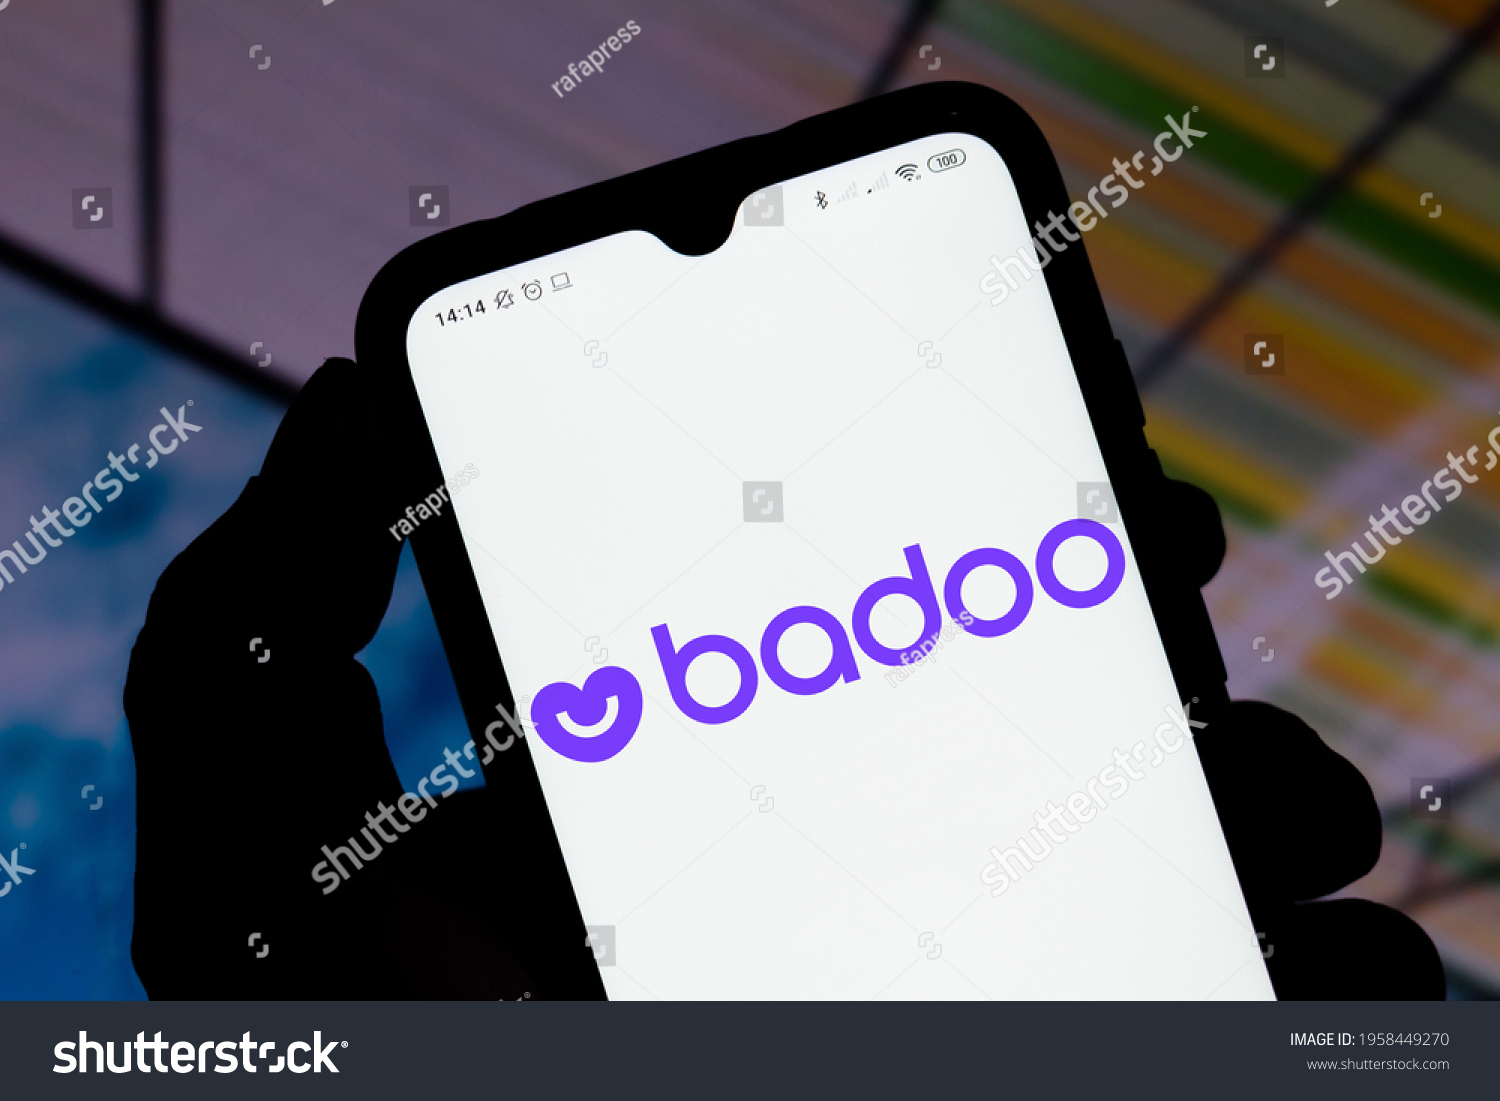 Badoo com